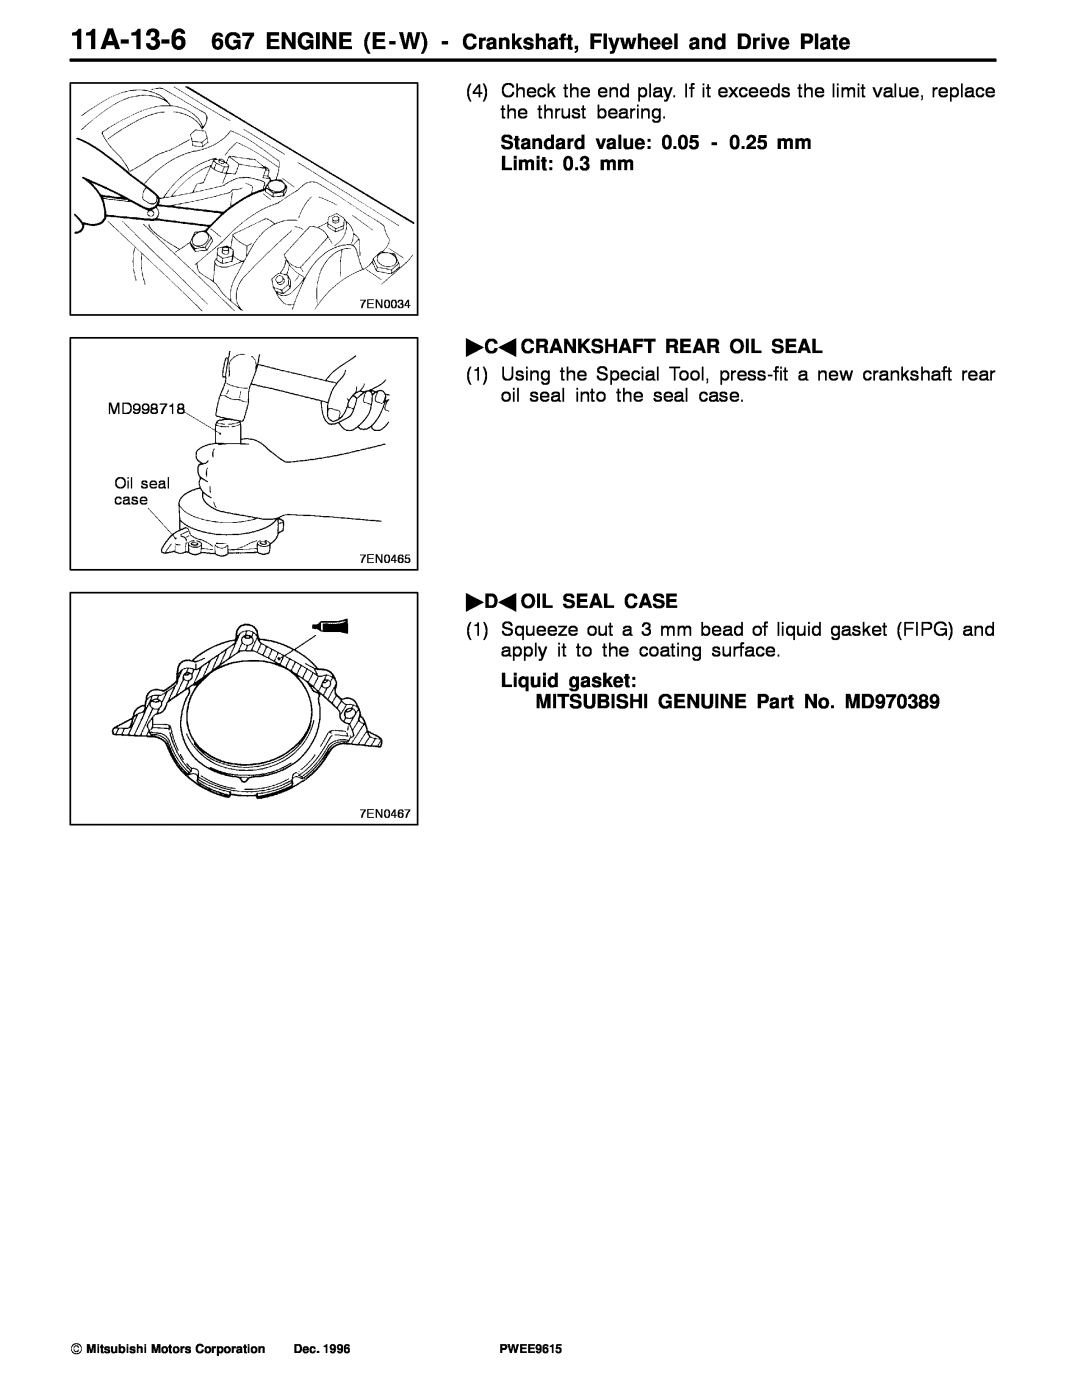 Mitsubishi 6G7 Standard value 0.05 - 0.25 mm Limit 0.3 mm, Ca Crankshaft Rear Oil Seal, Da Oil Seal Case, Liquid gasket 